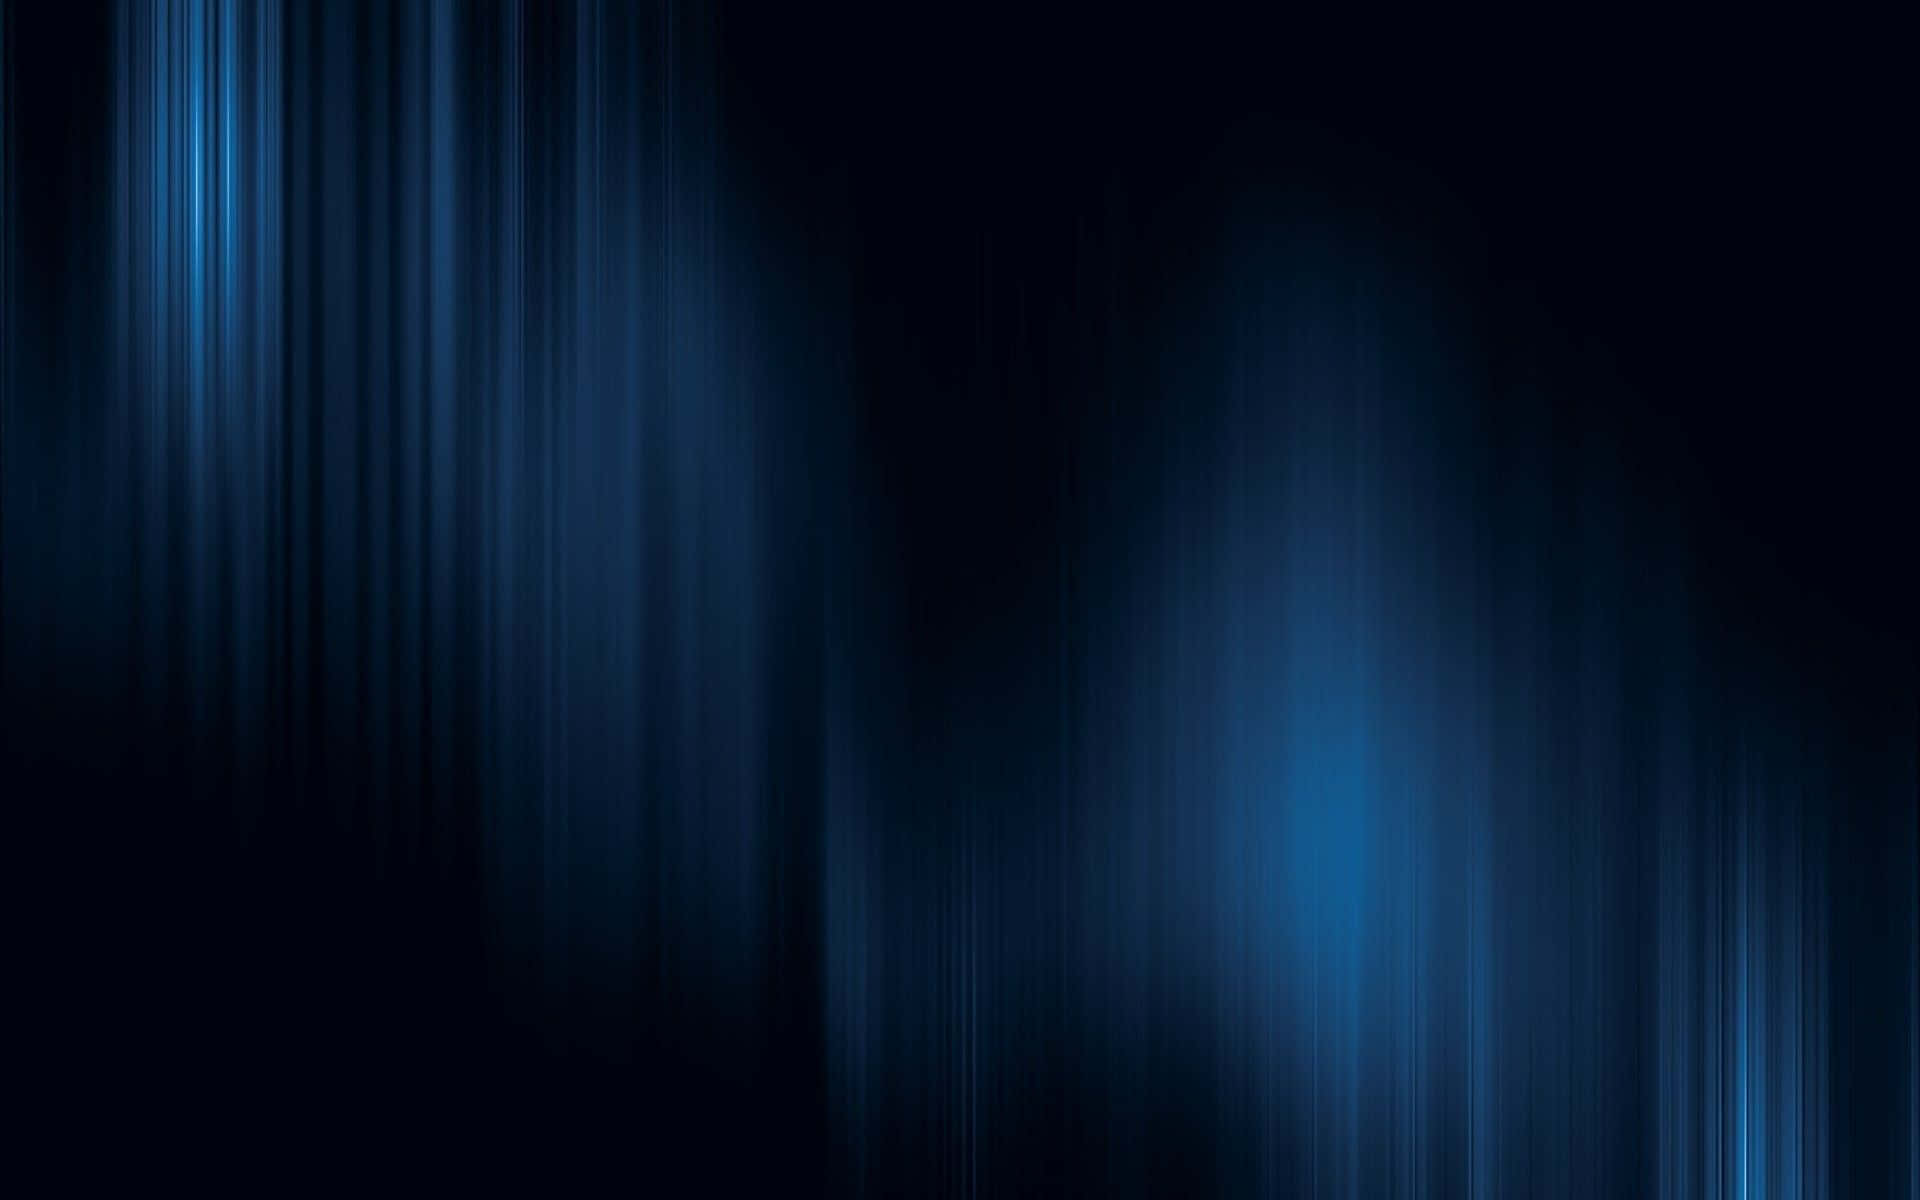 Vignette Blurred Curtain Blue And Black Background